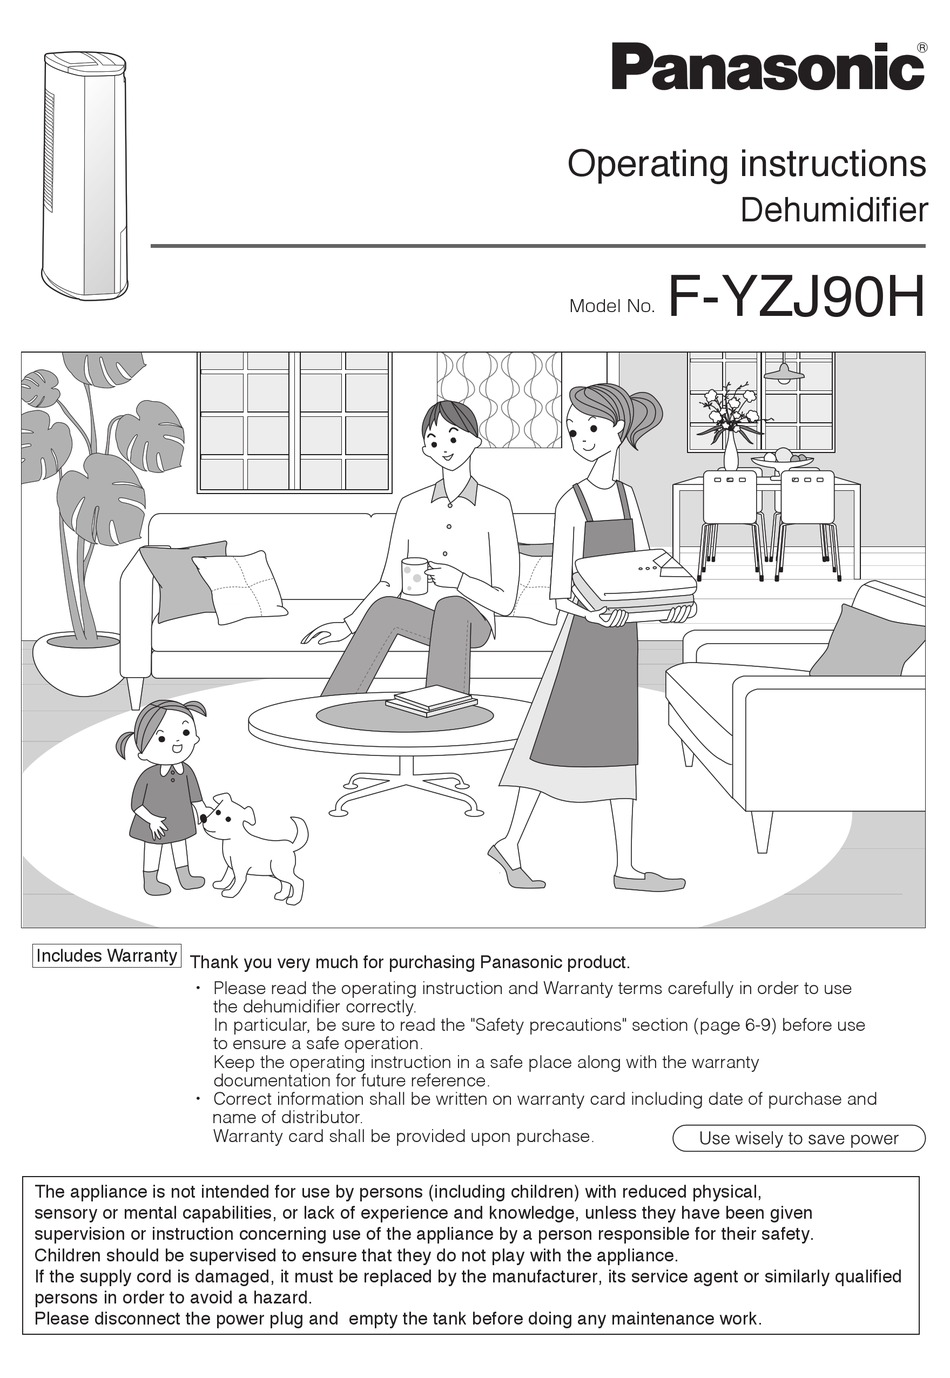 PANASONIC F-YZJ90H OPERATING INSTRUCTIONS MANUAL Pdf Download | ManualsLib